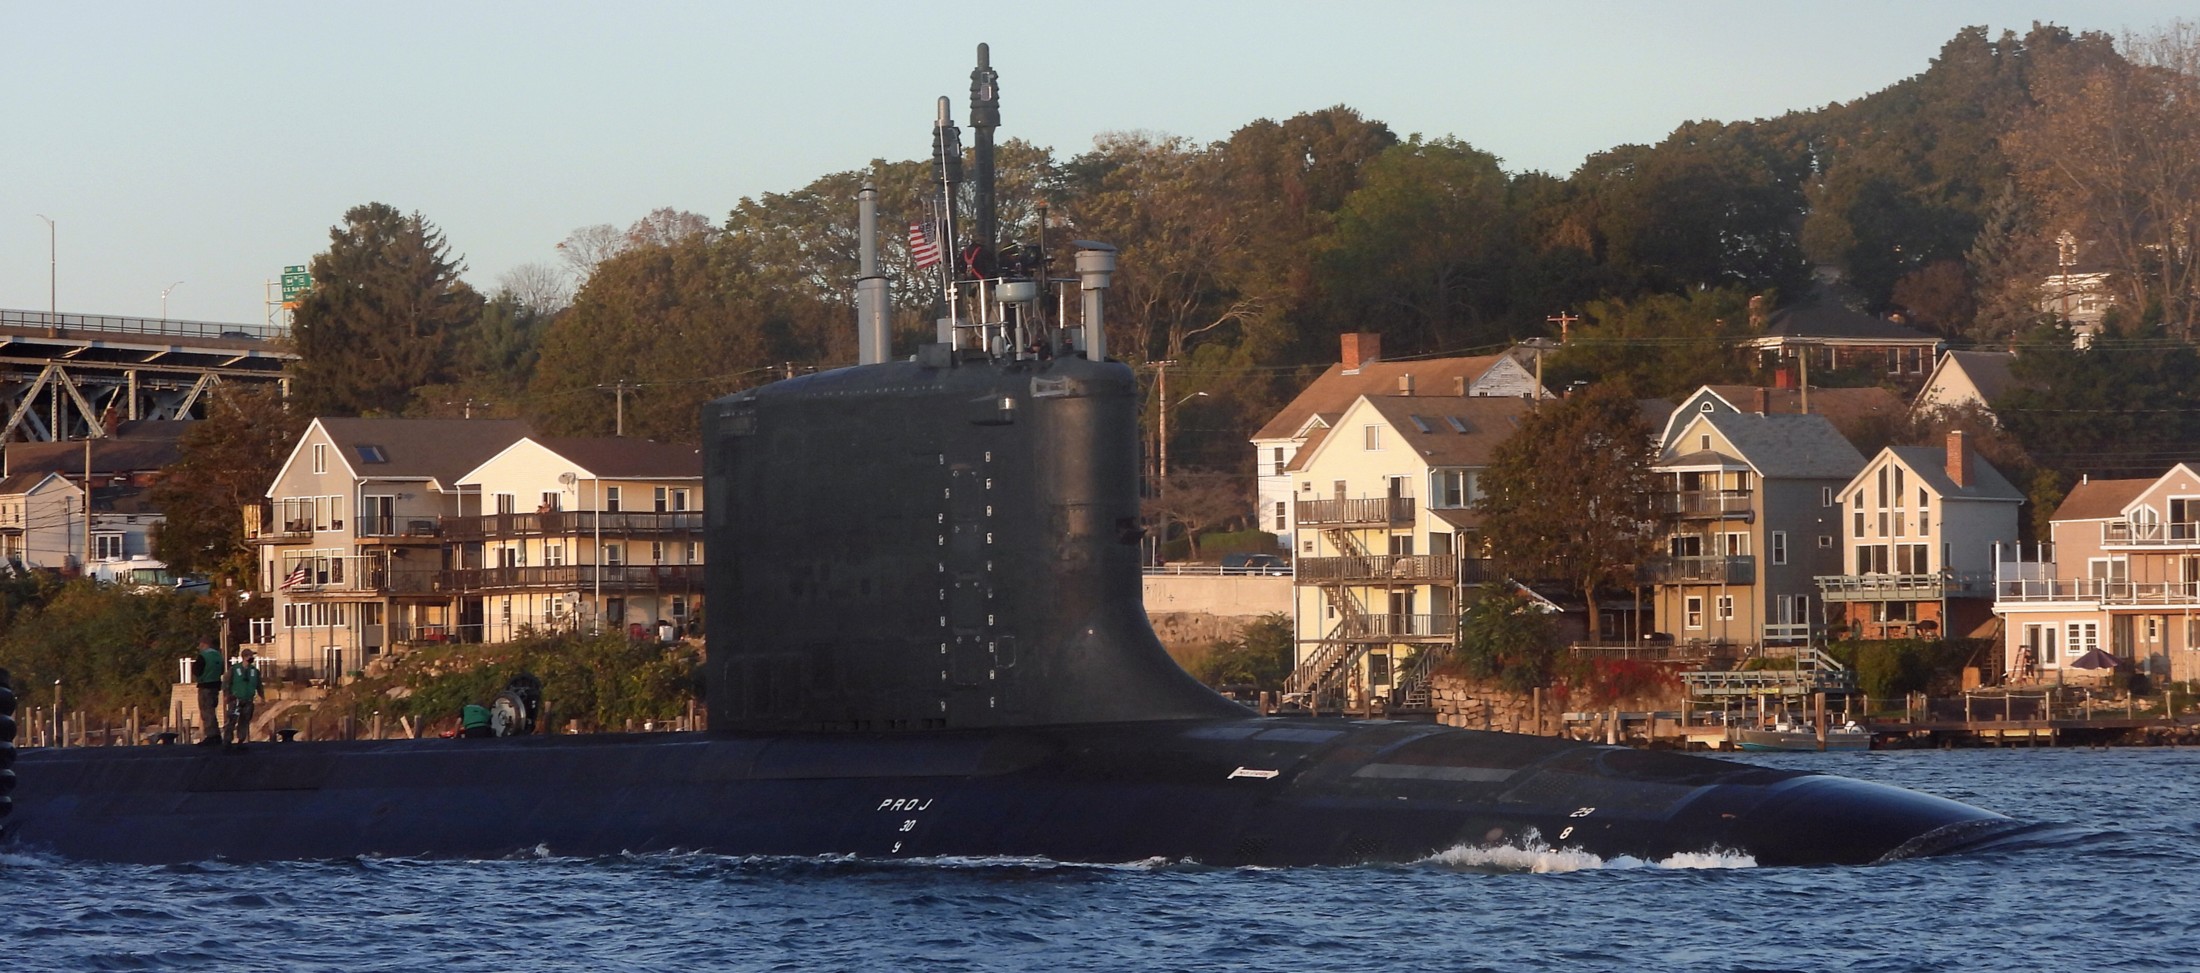 ssn-792 uss vermont virginia class attack submarine us navy new london groton